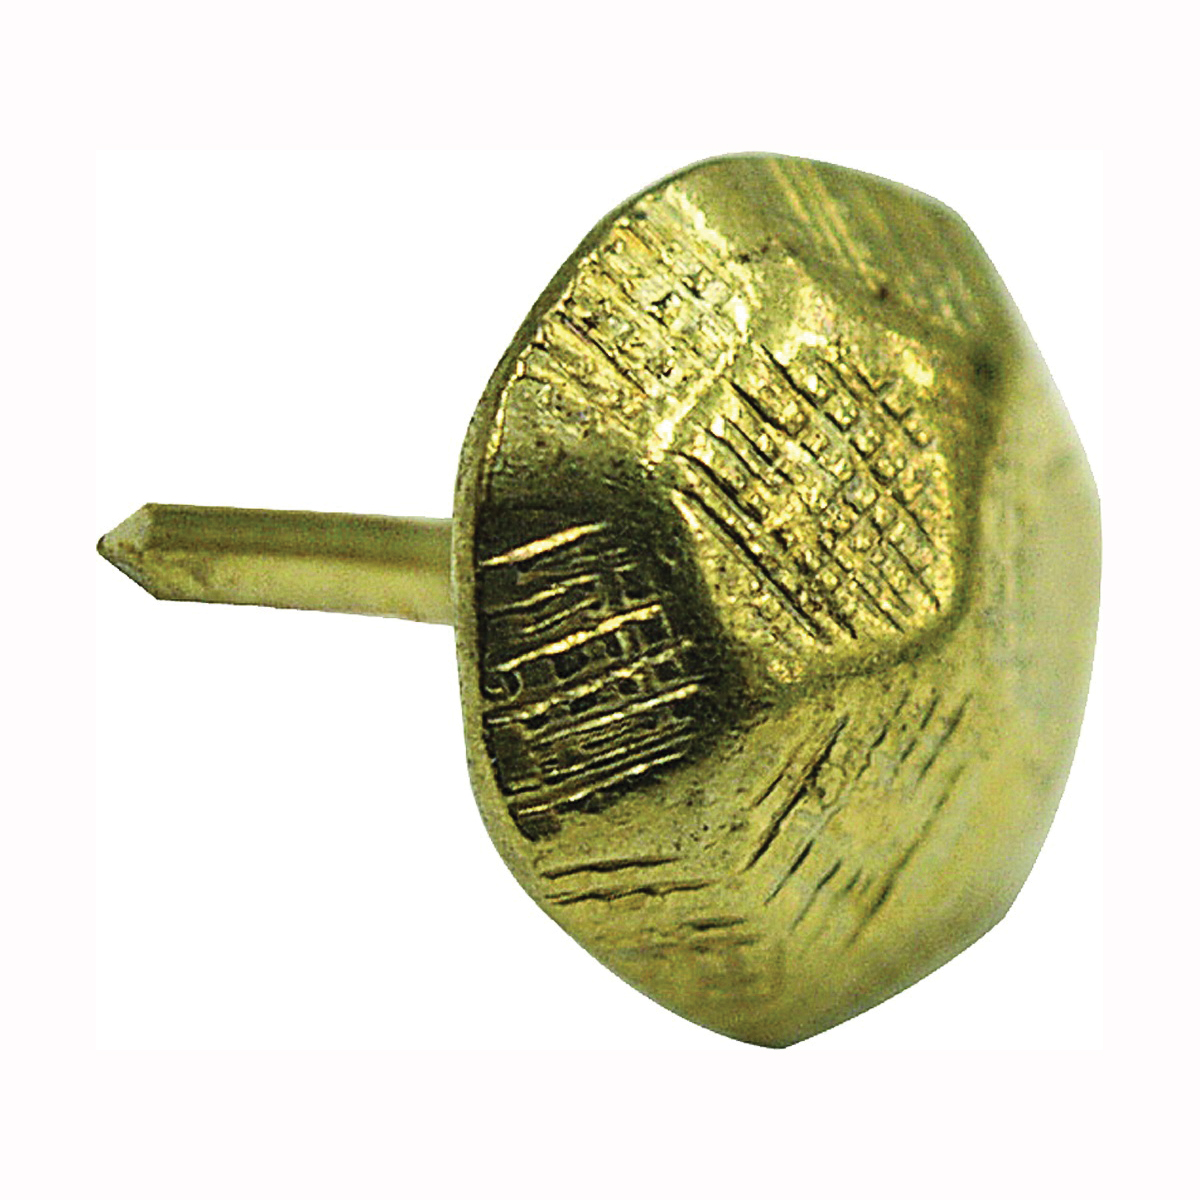 HILLMAN 122691 Furniture Nail, Brass, Hammered Head - 1